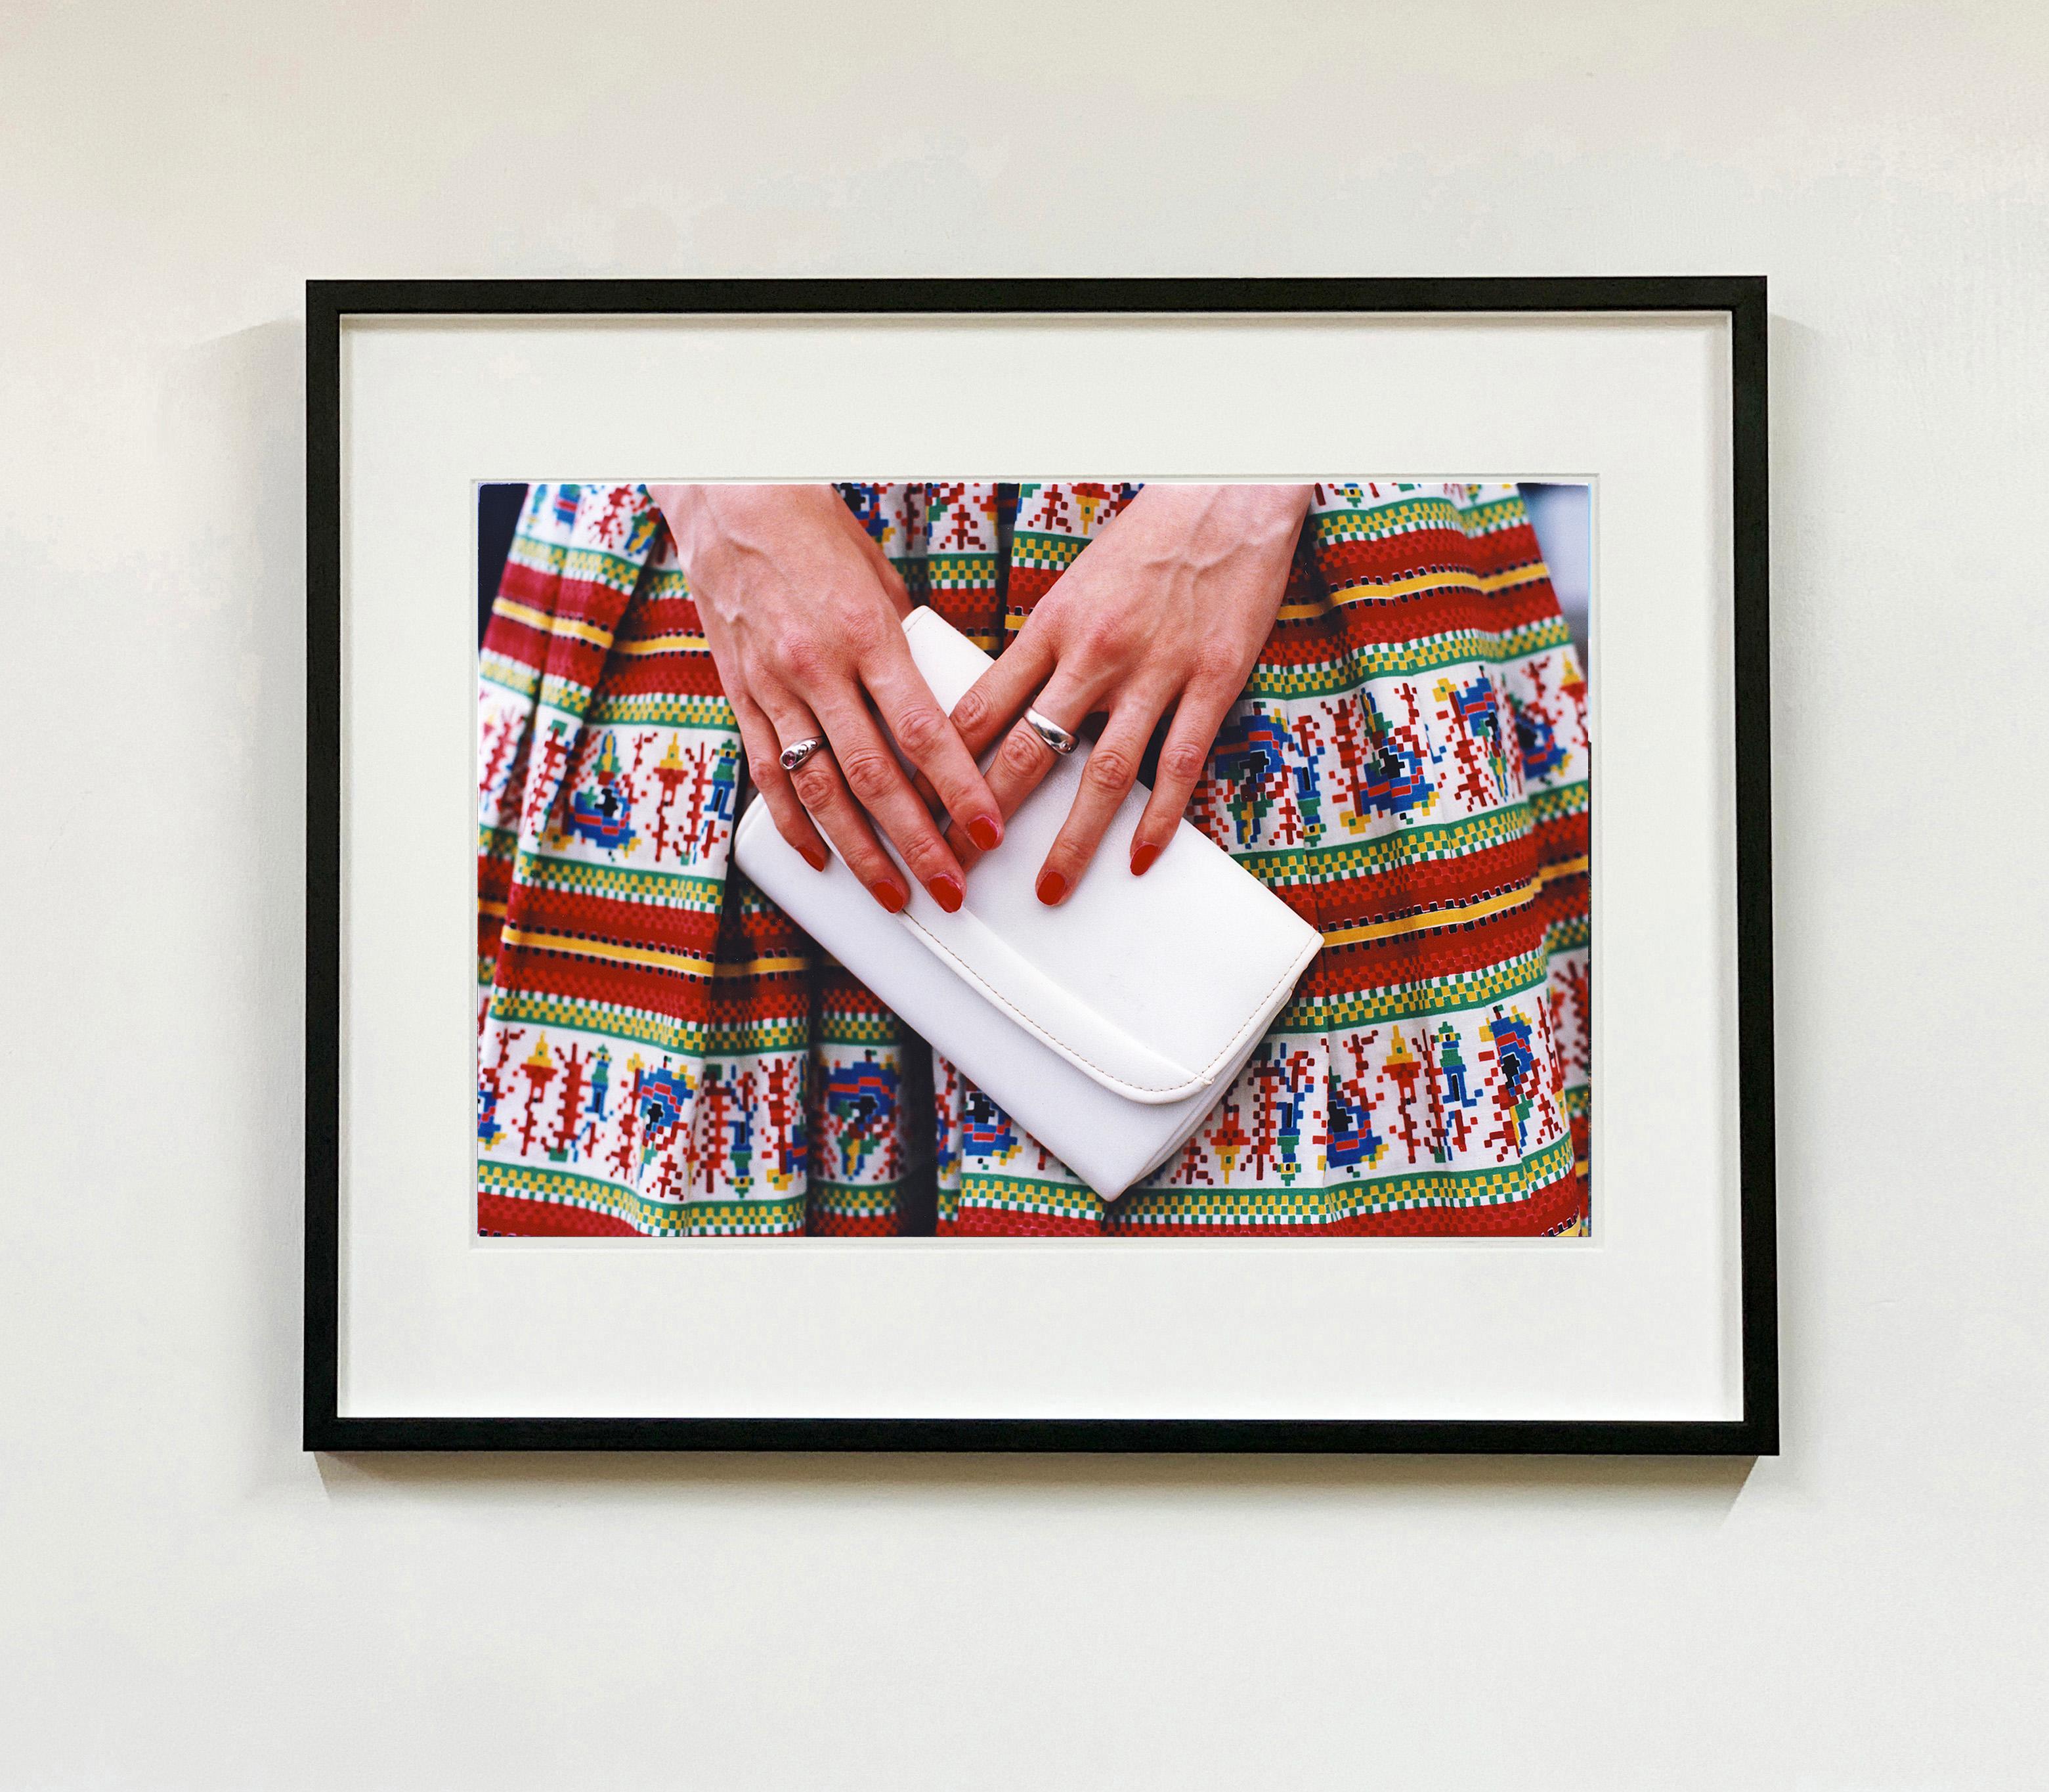 White Handbag, Goodwood, Chichester - Feminine fashion, color photography - Photograph by Richard Heeps